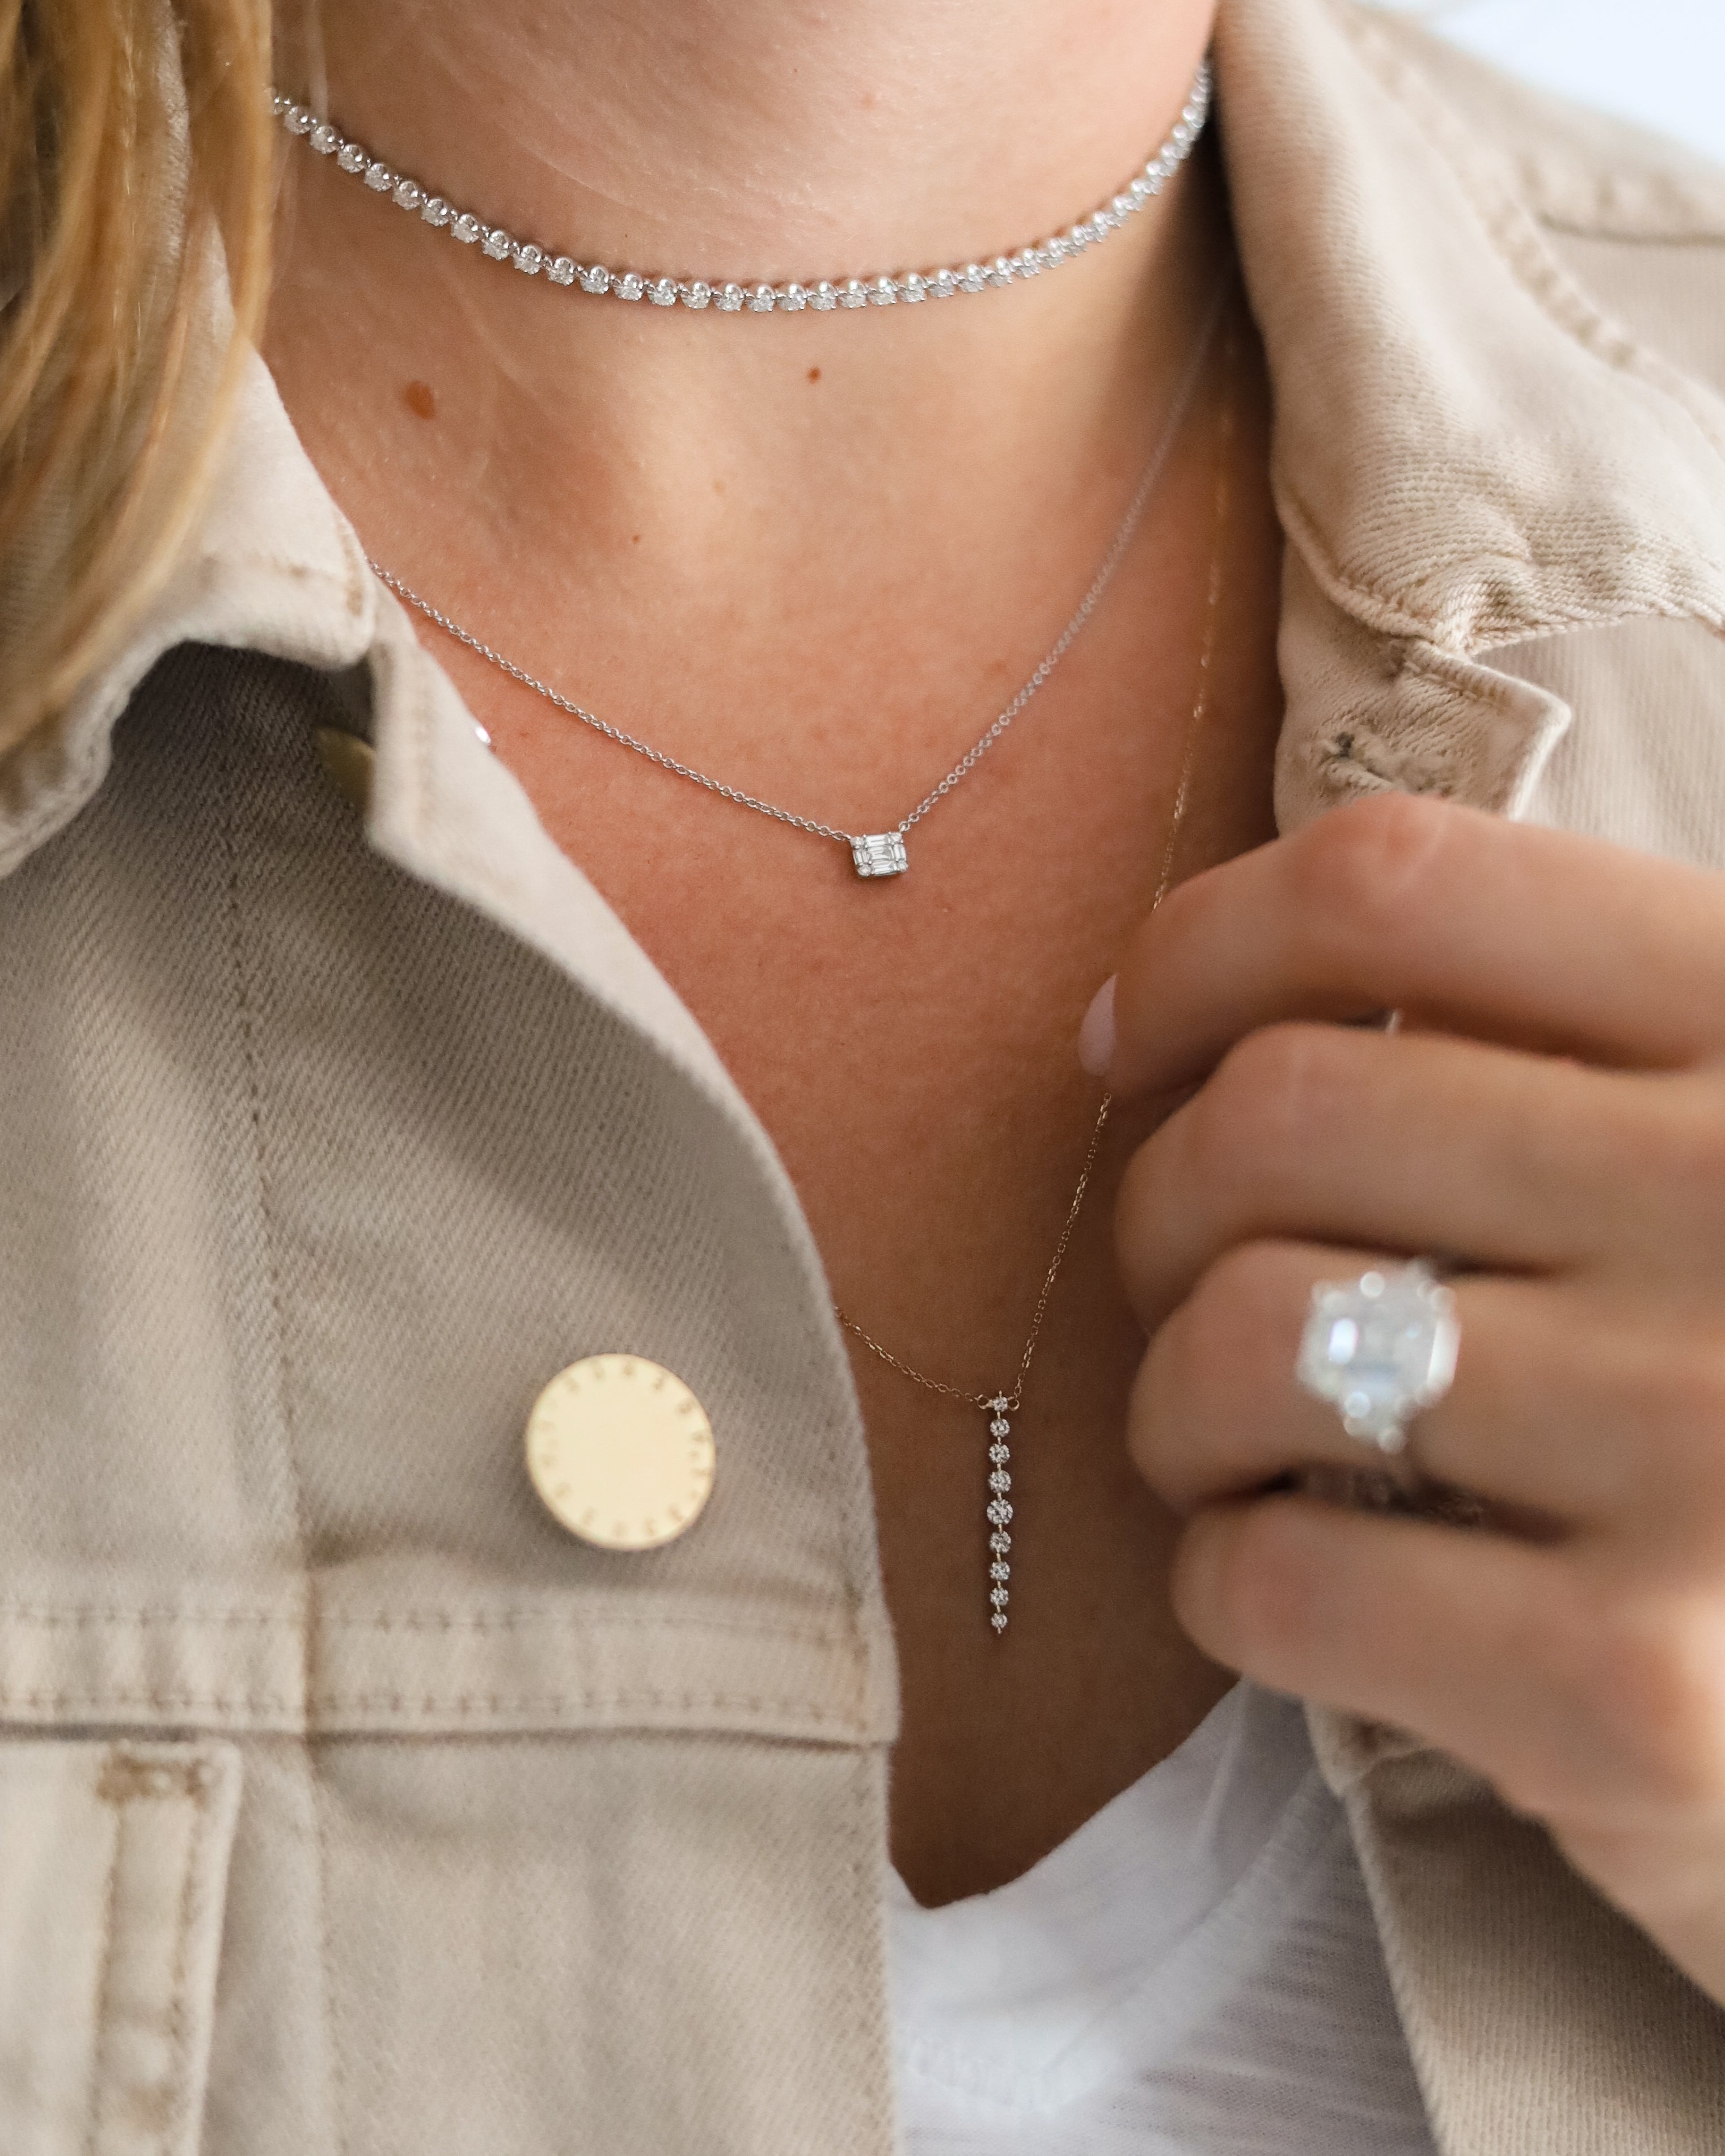 Welljewel America diamond necklace jewelry set for women and girl (200 /NC/SIL)